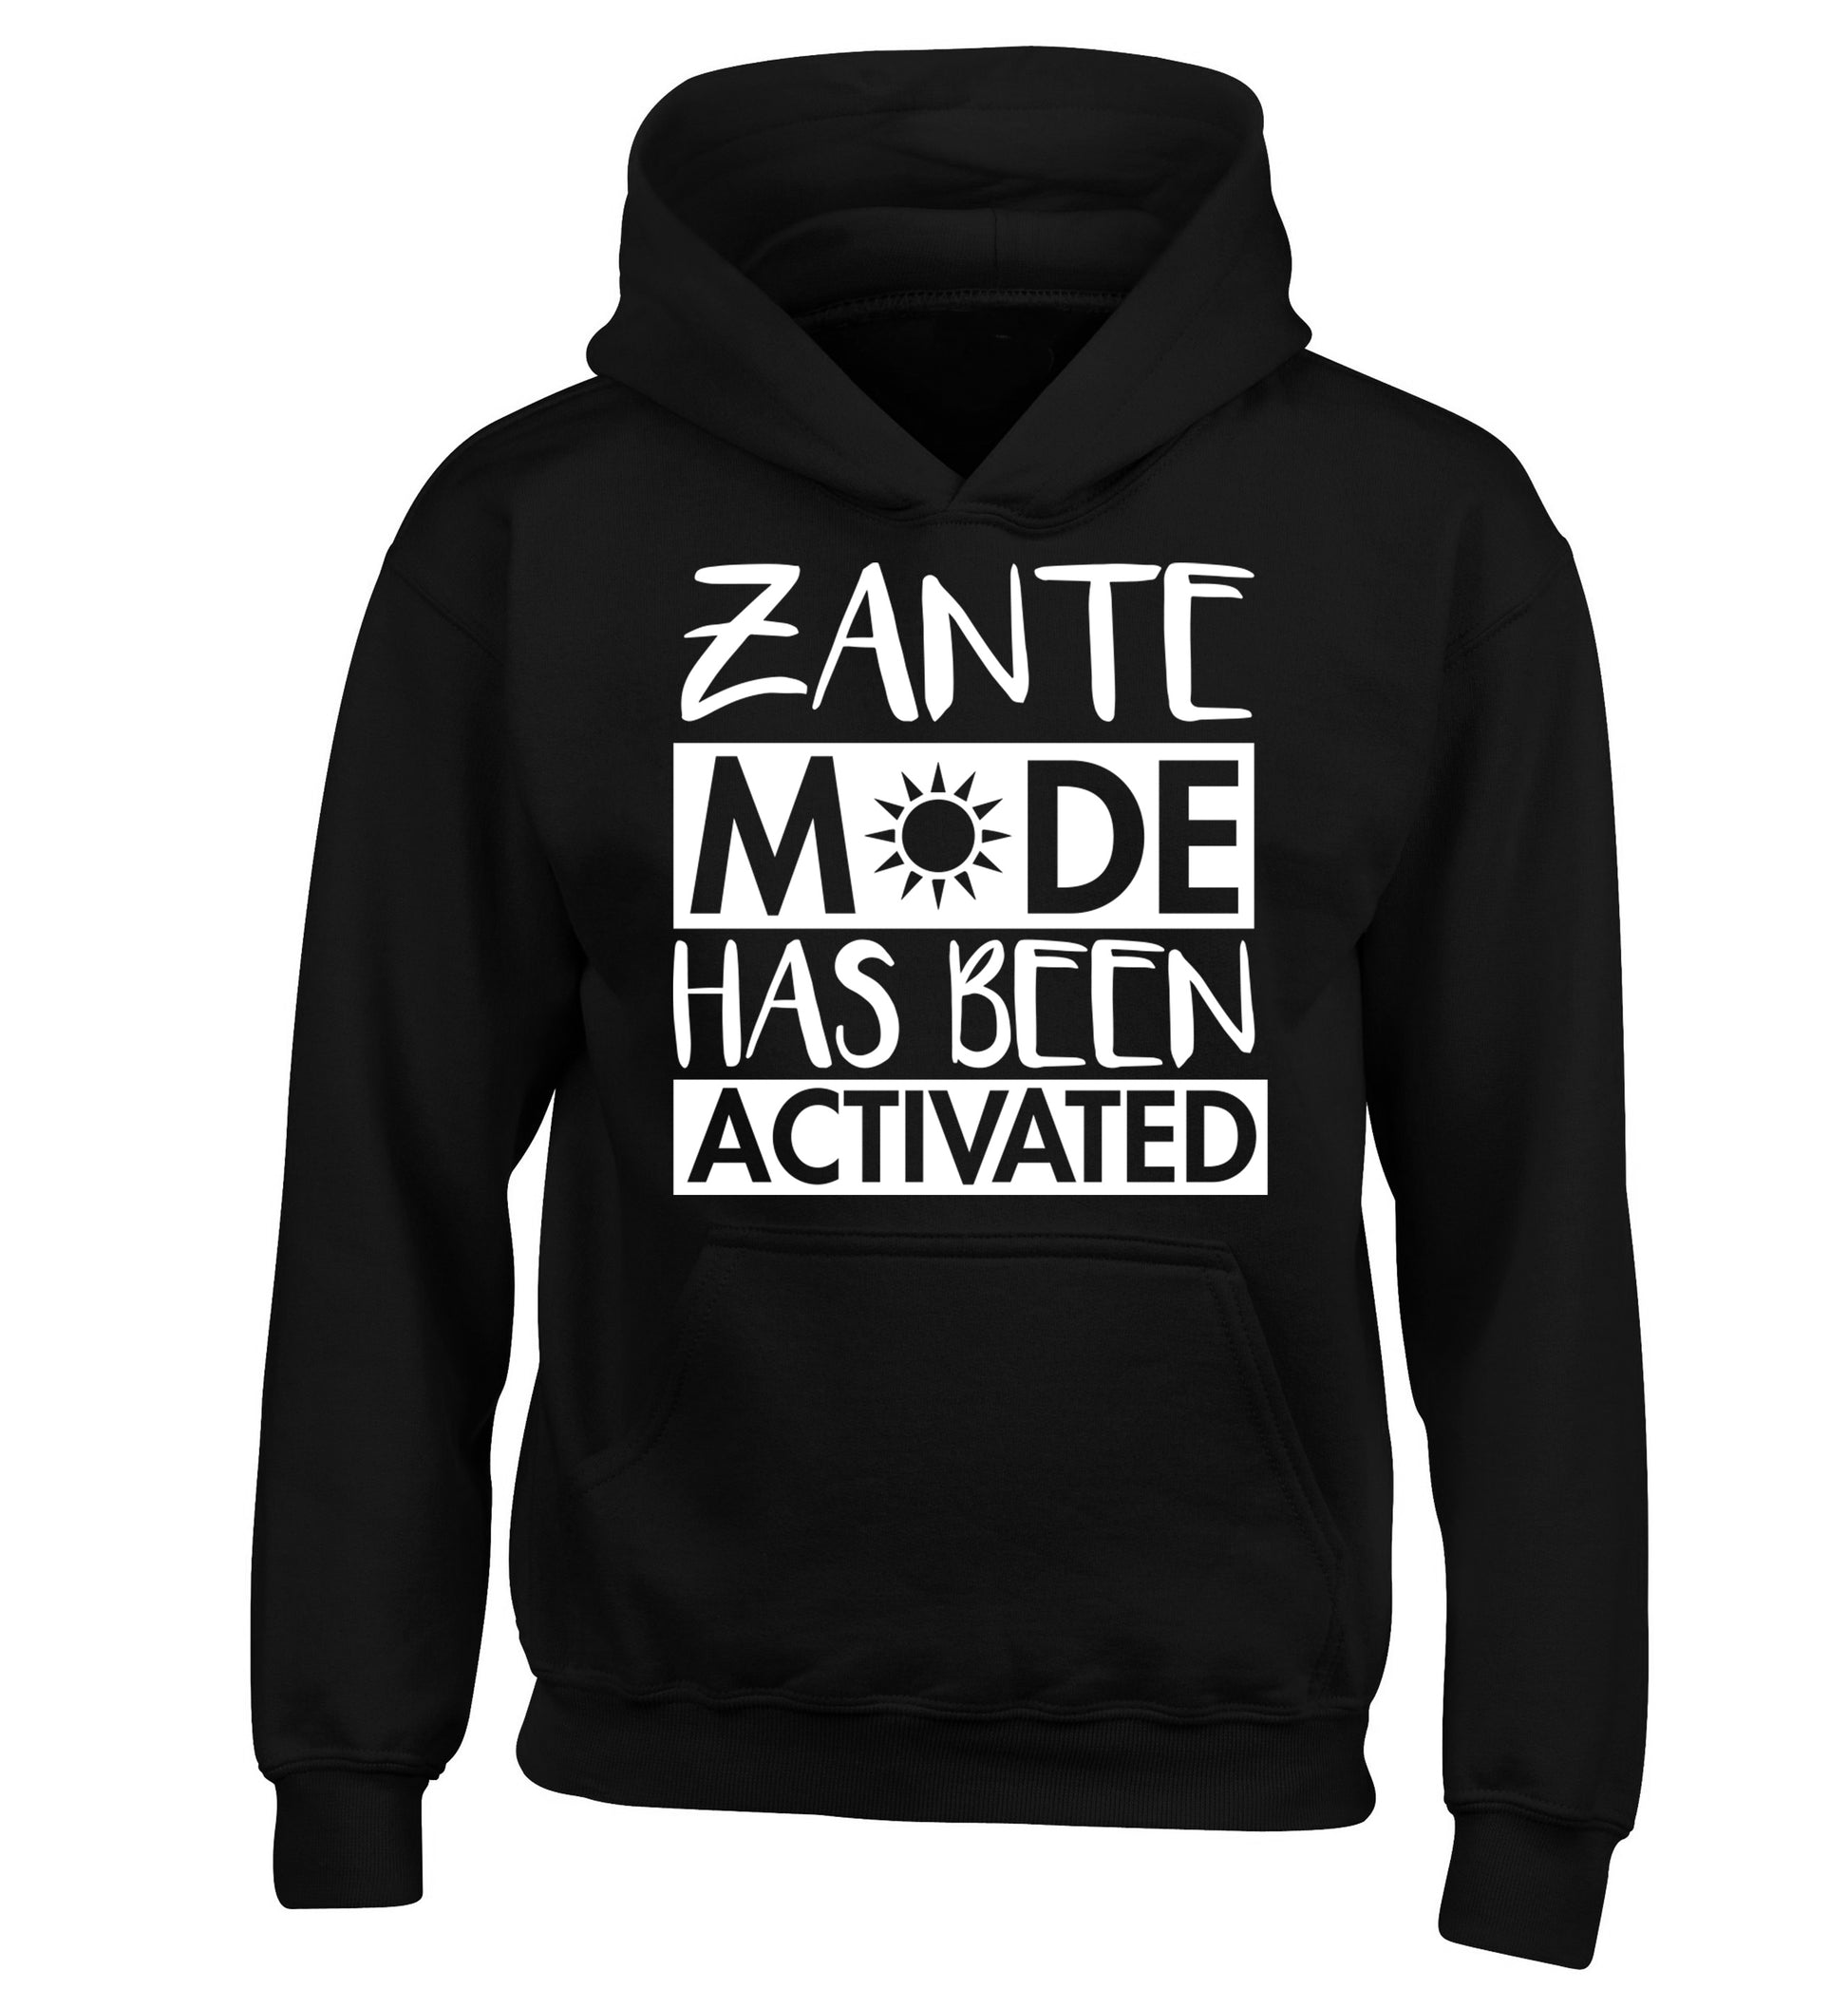 Zante mode has been activated children's black hoodie 12-13 Years